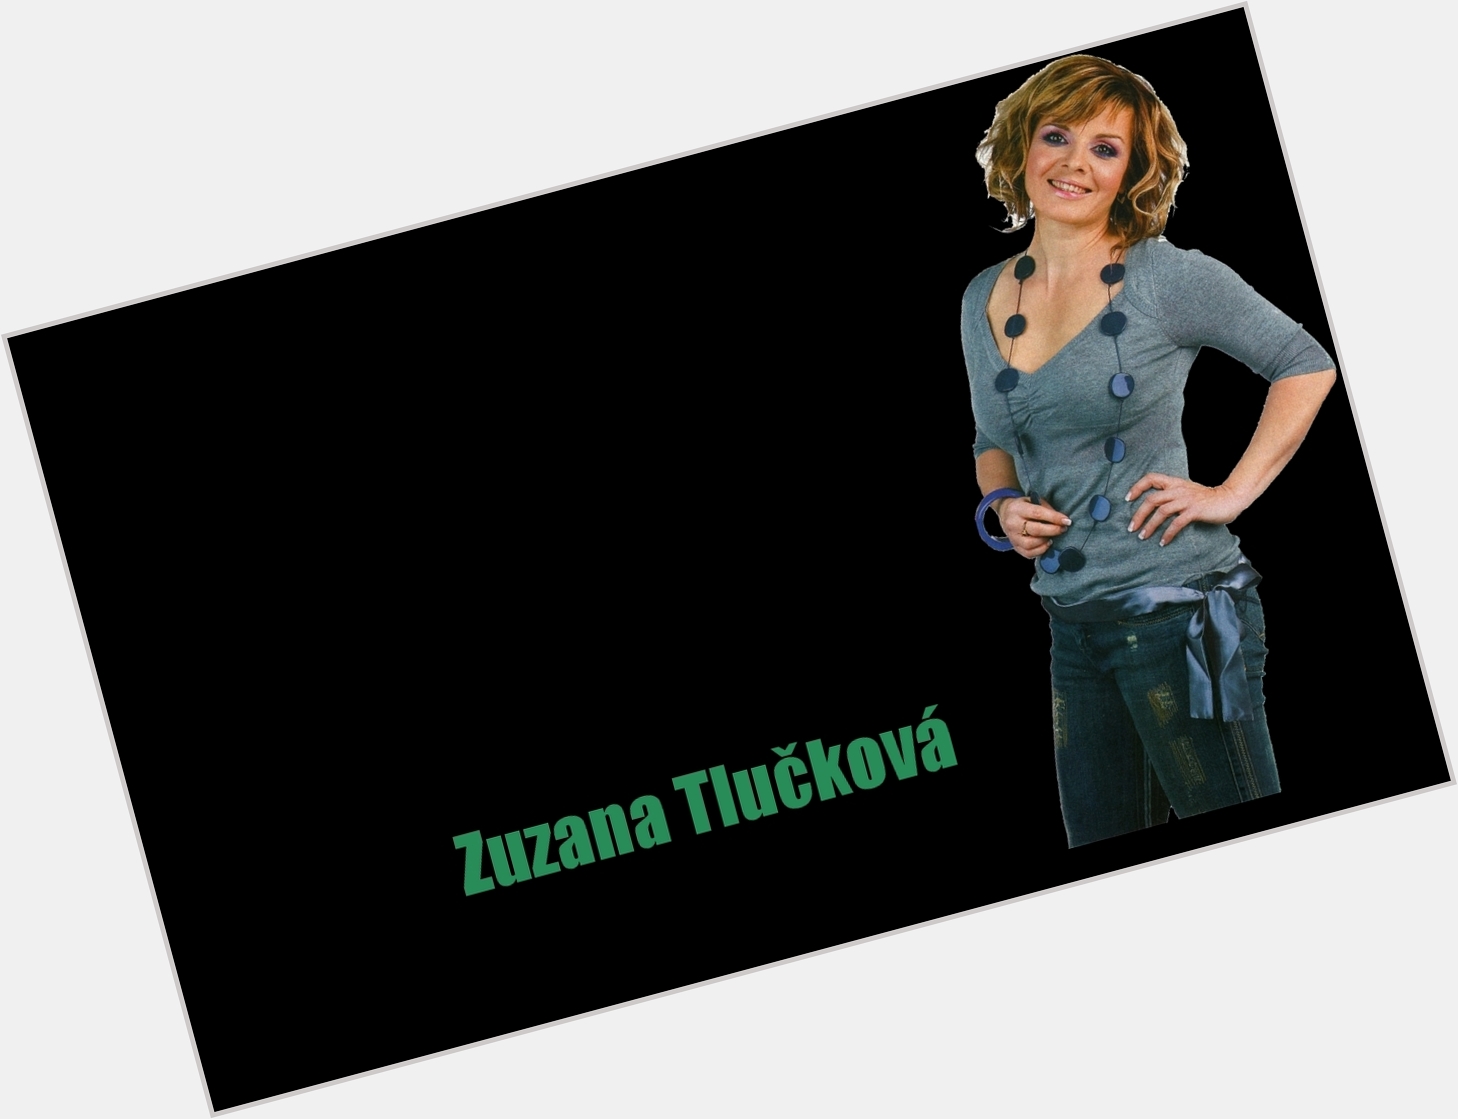 Zuzana Tluckova dating 2.jpg